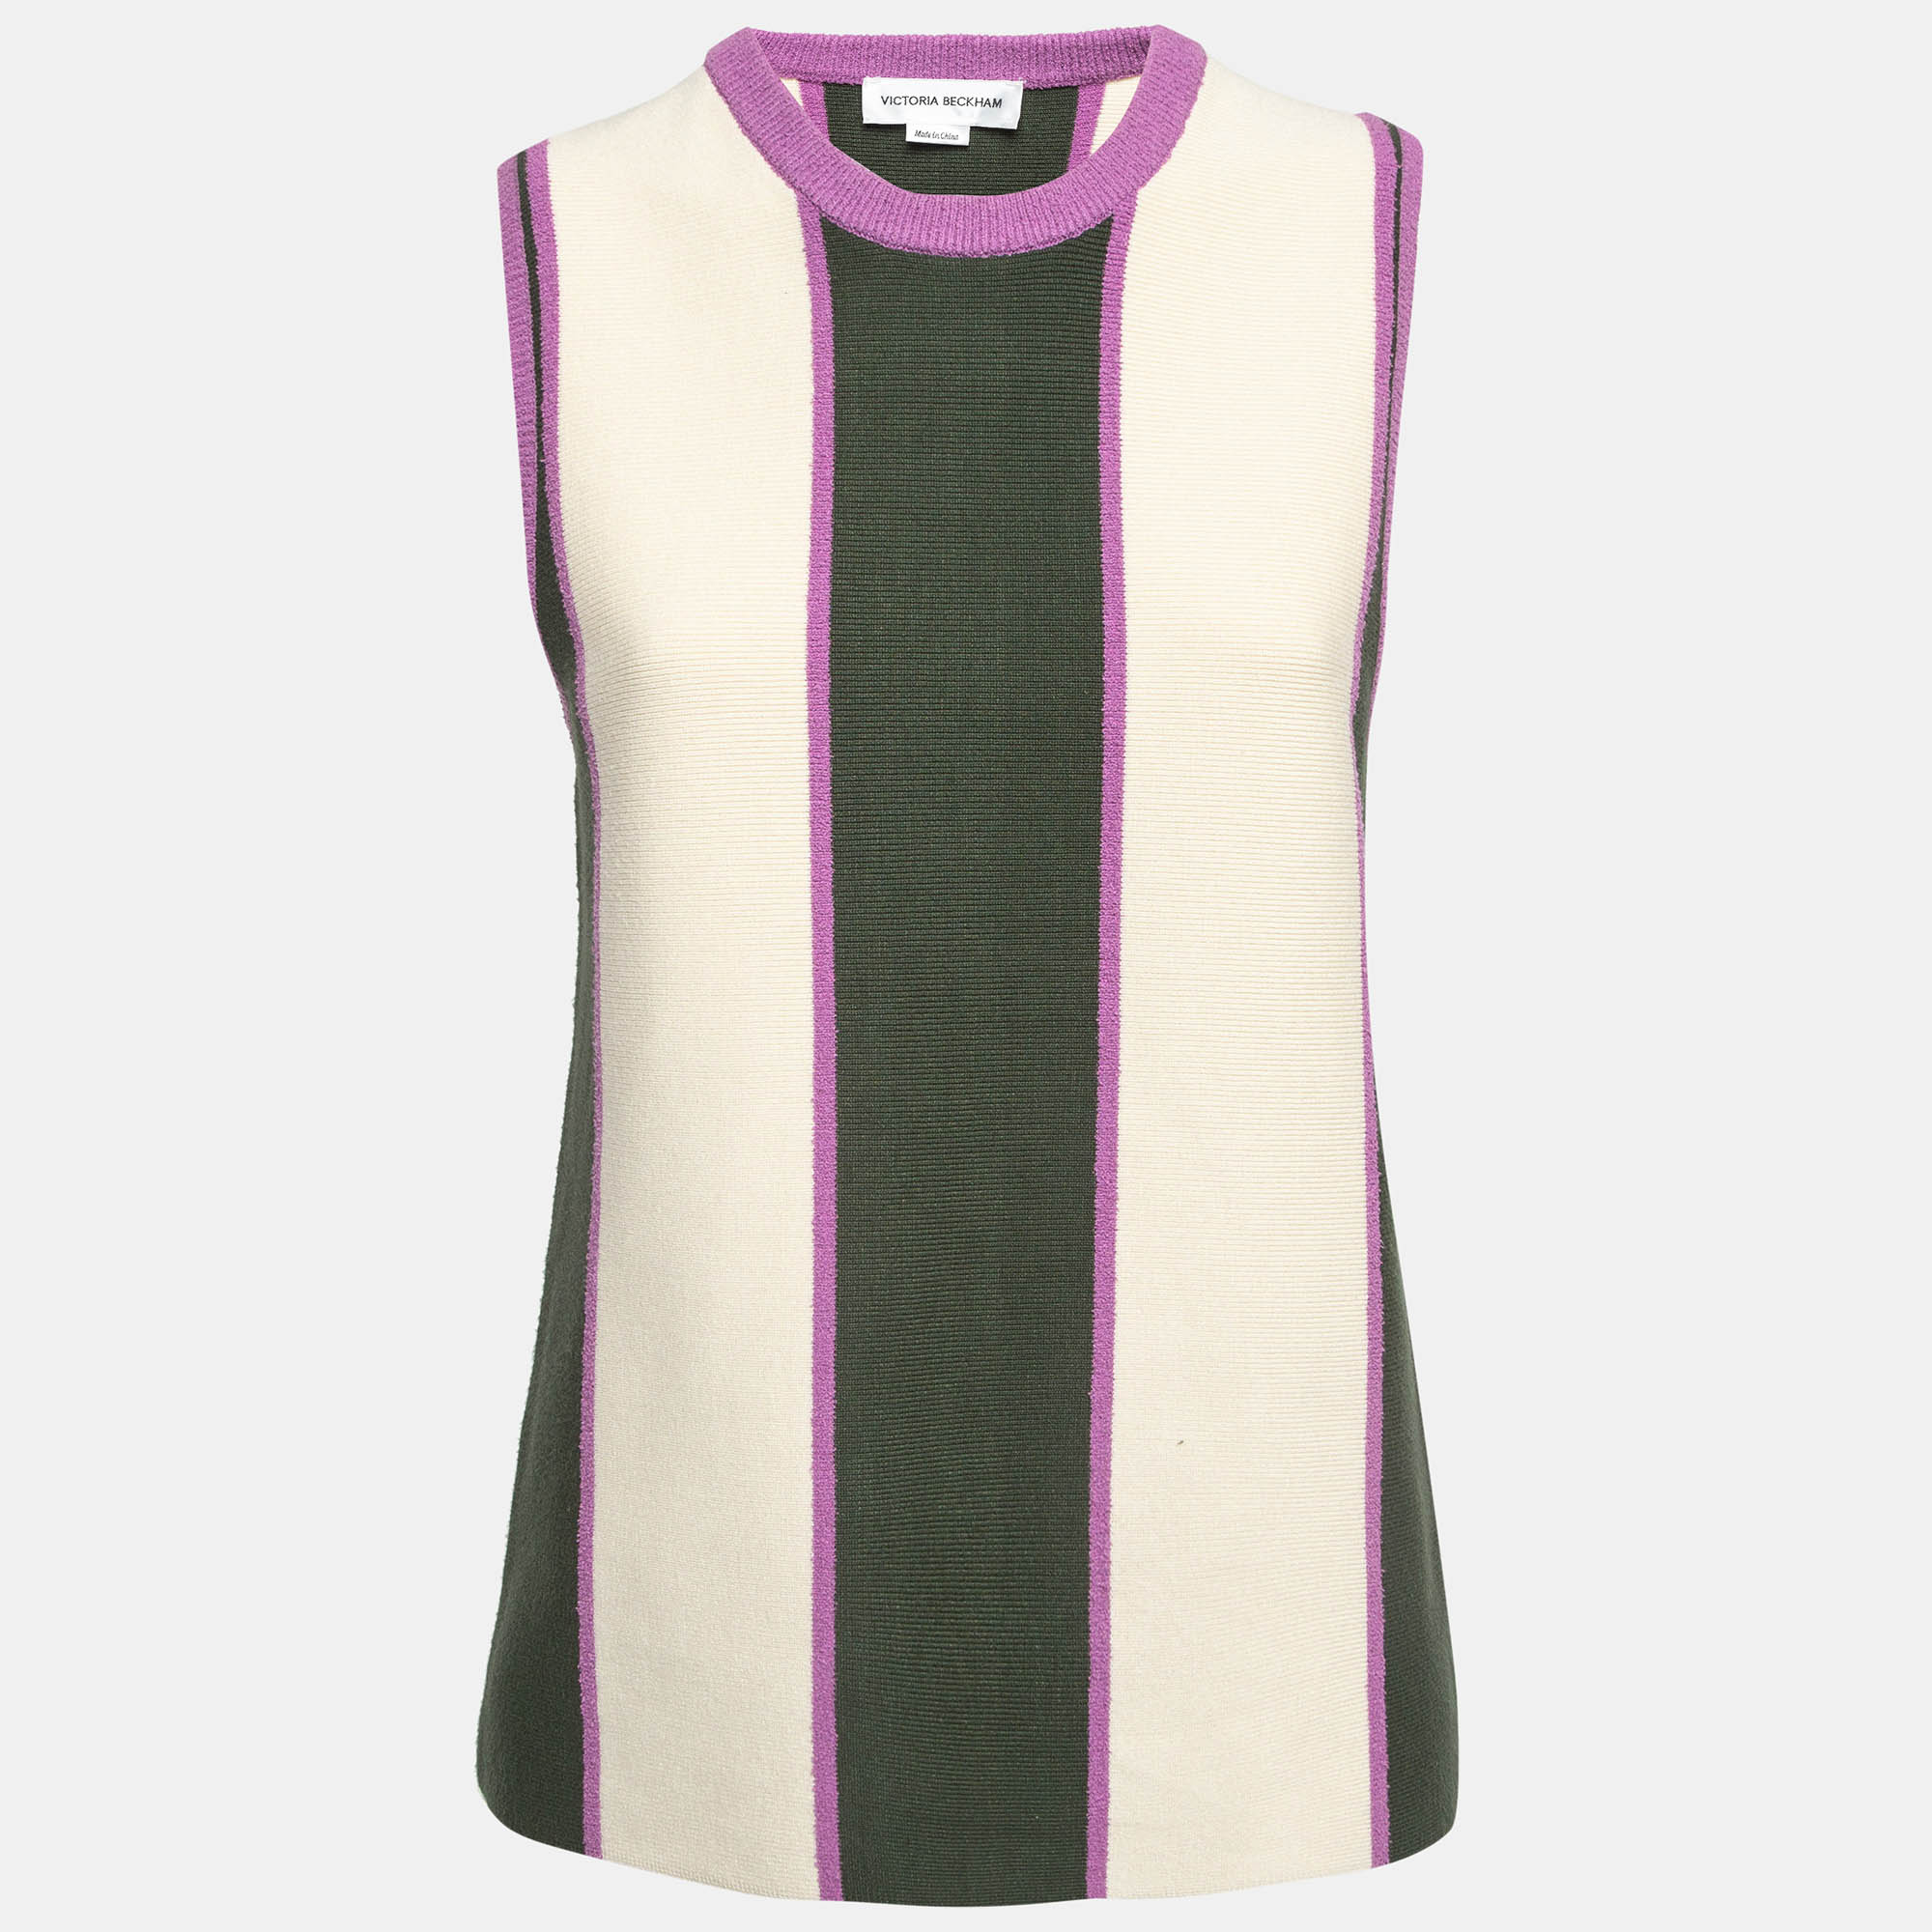 Victoria beckham multicolor knit sleeveless tank top m